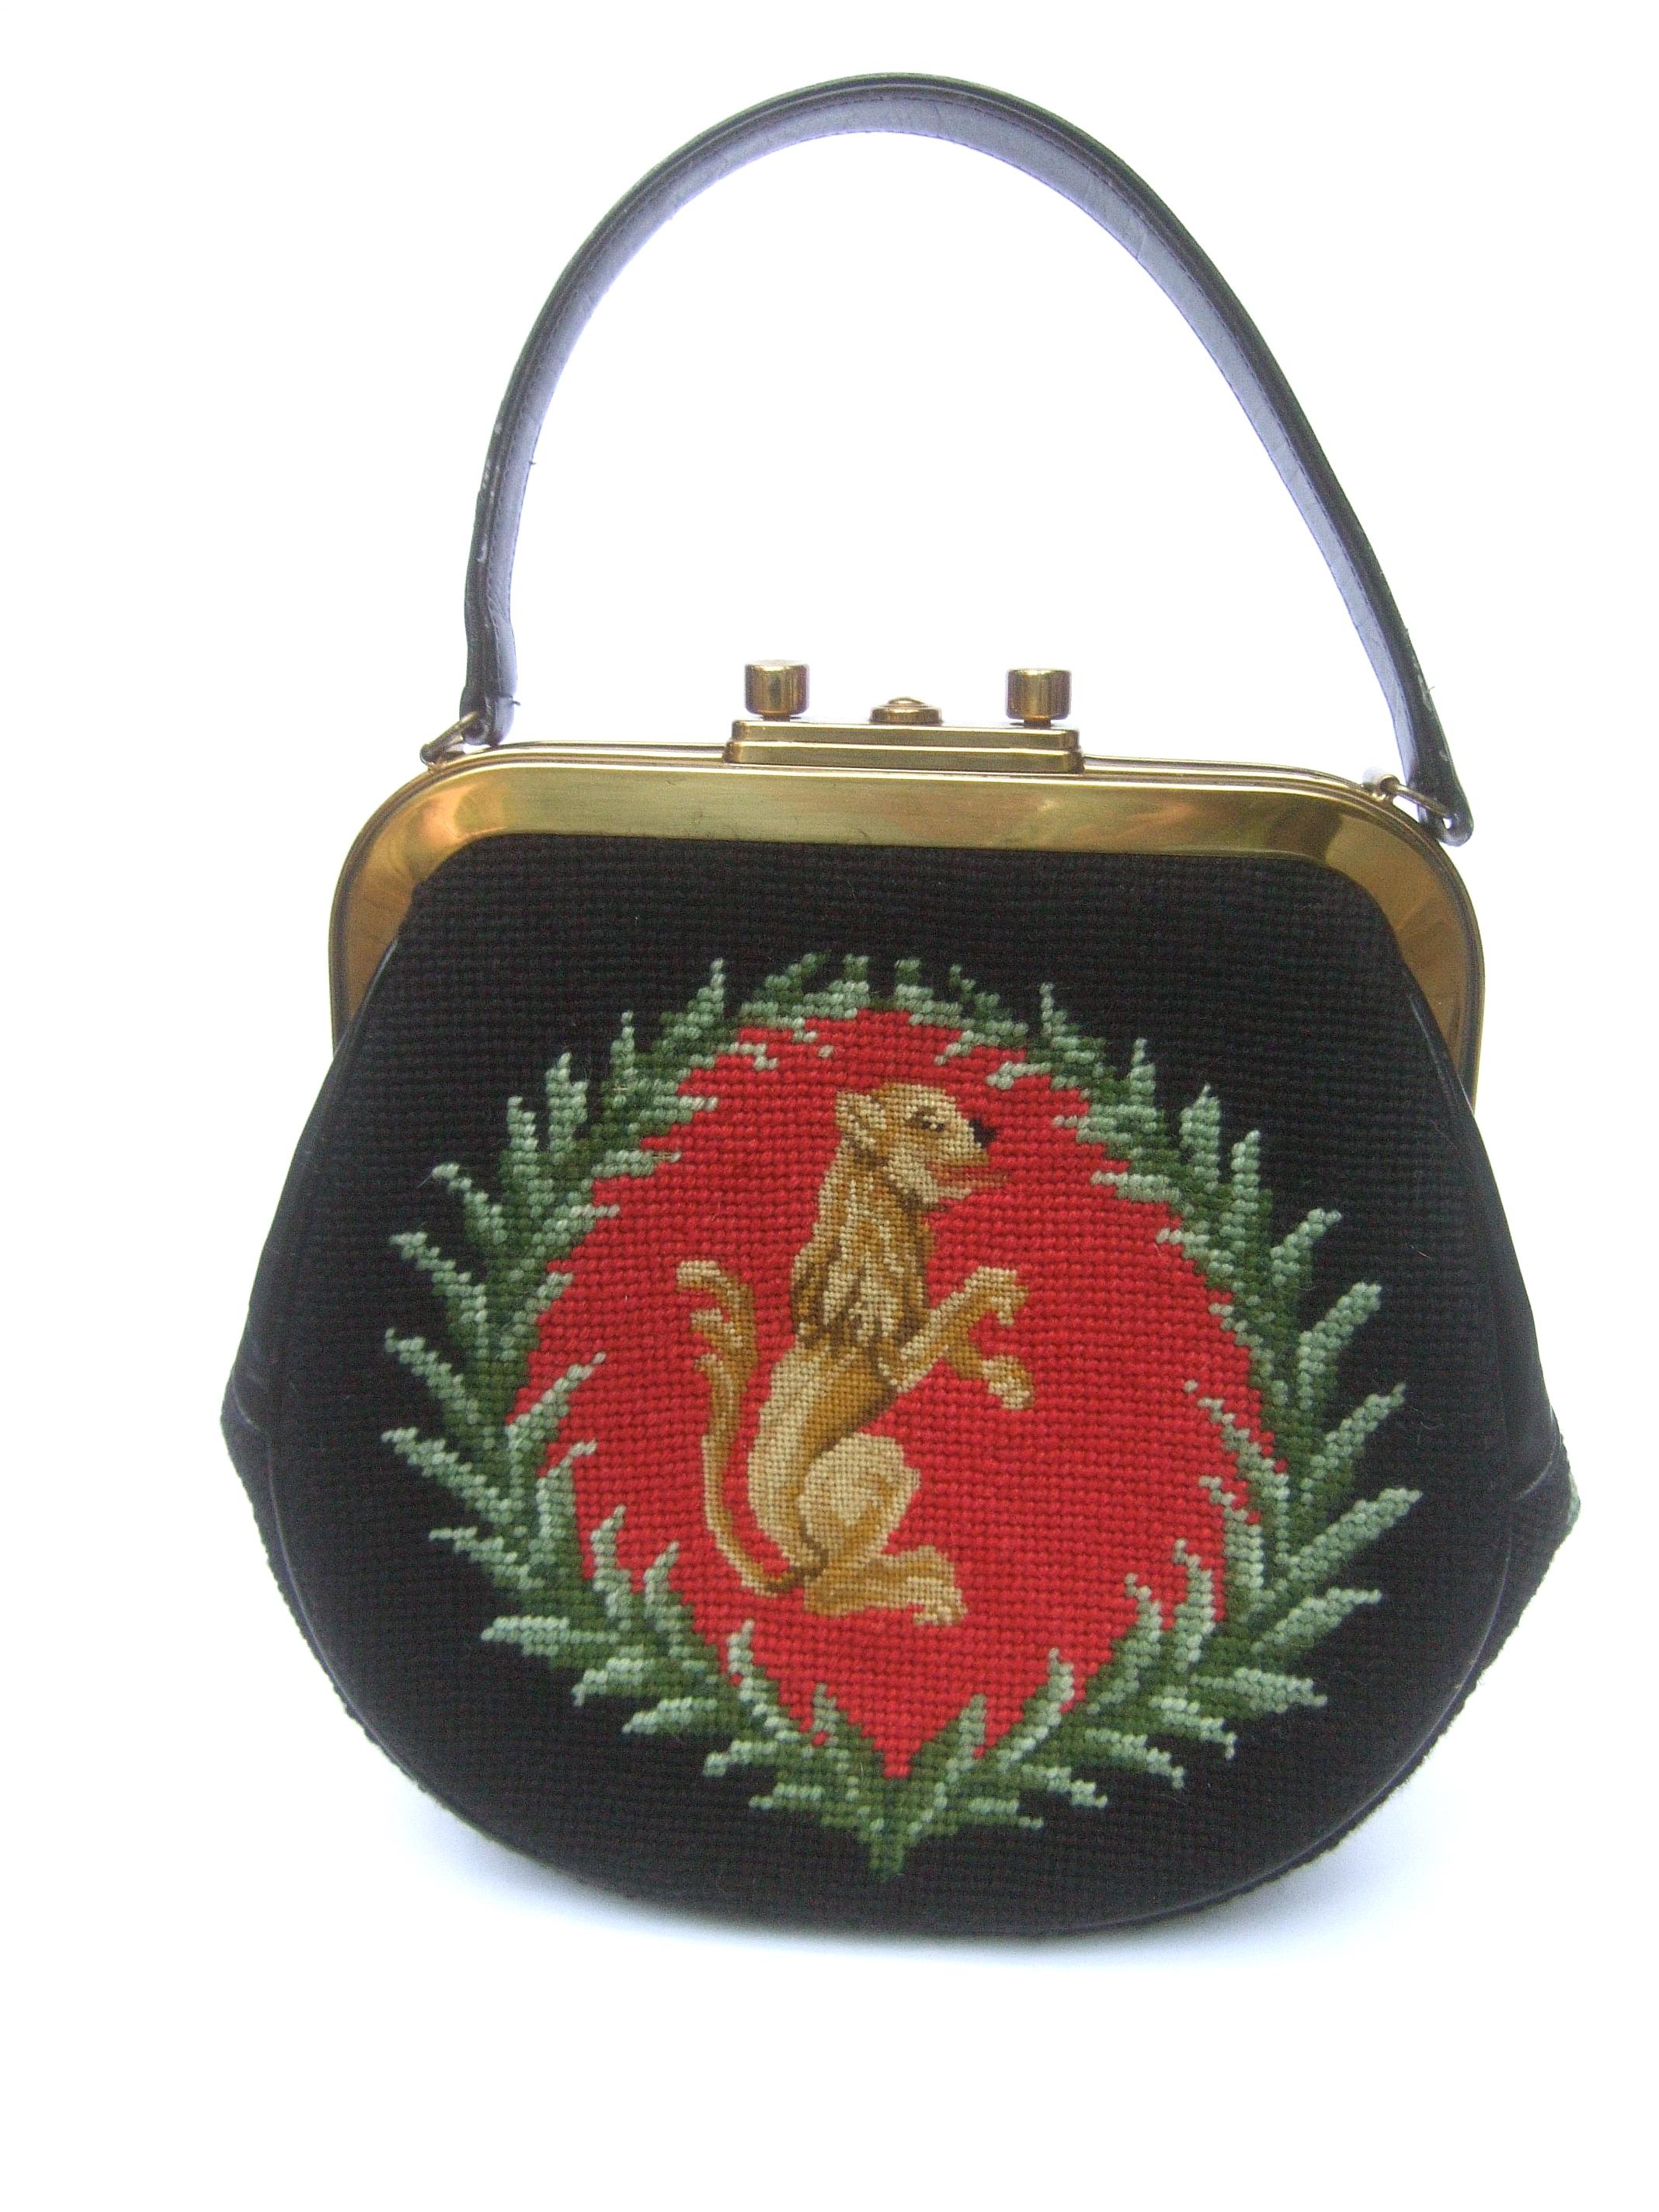 Black Needlepoint Artisan Griffin & Laurels Hand Stitched Handbag c 1970 For Sale